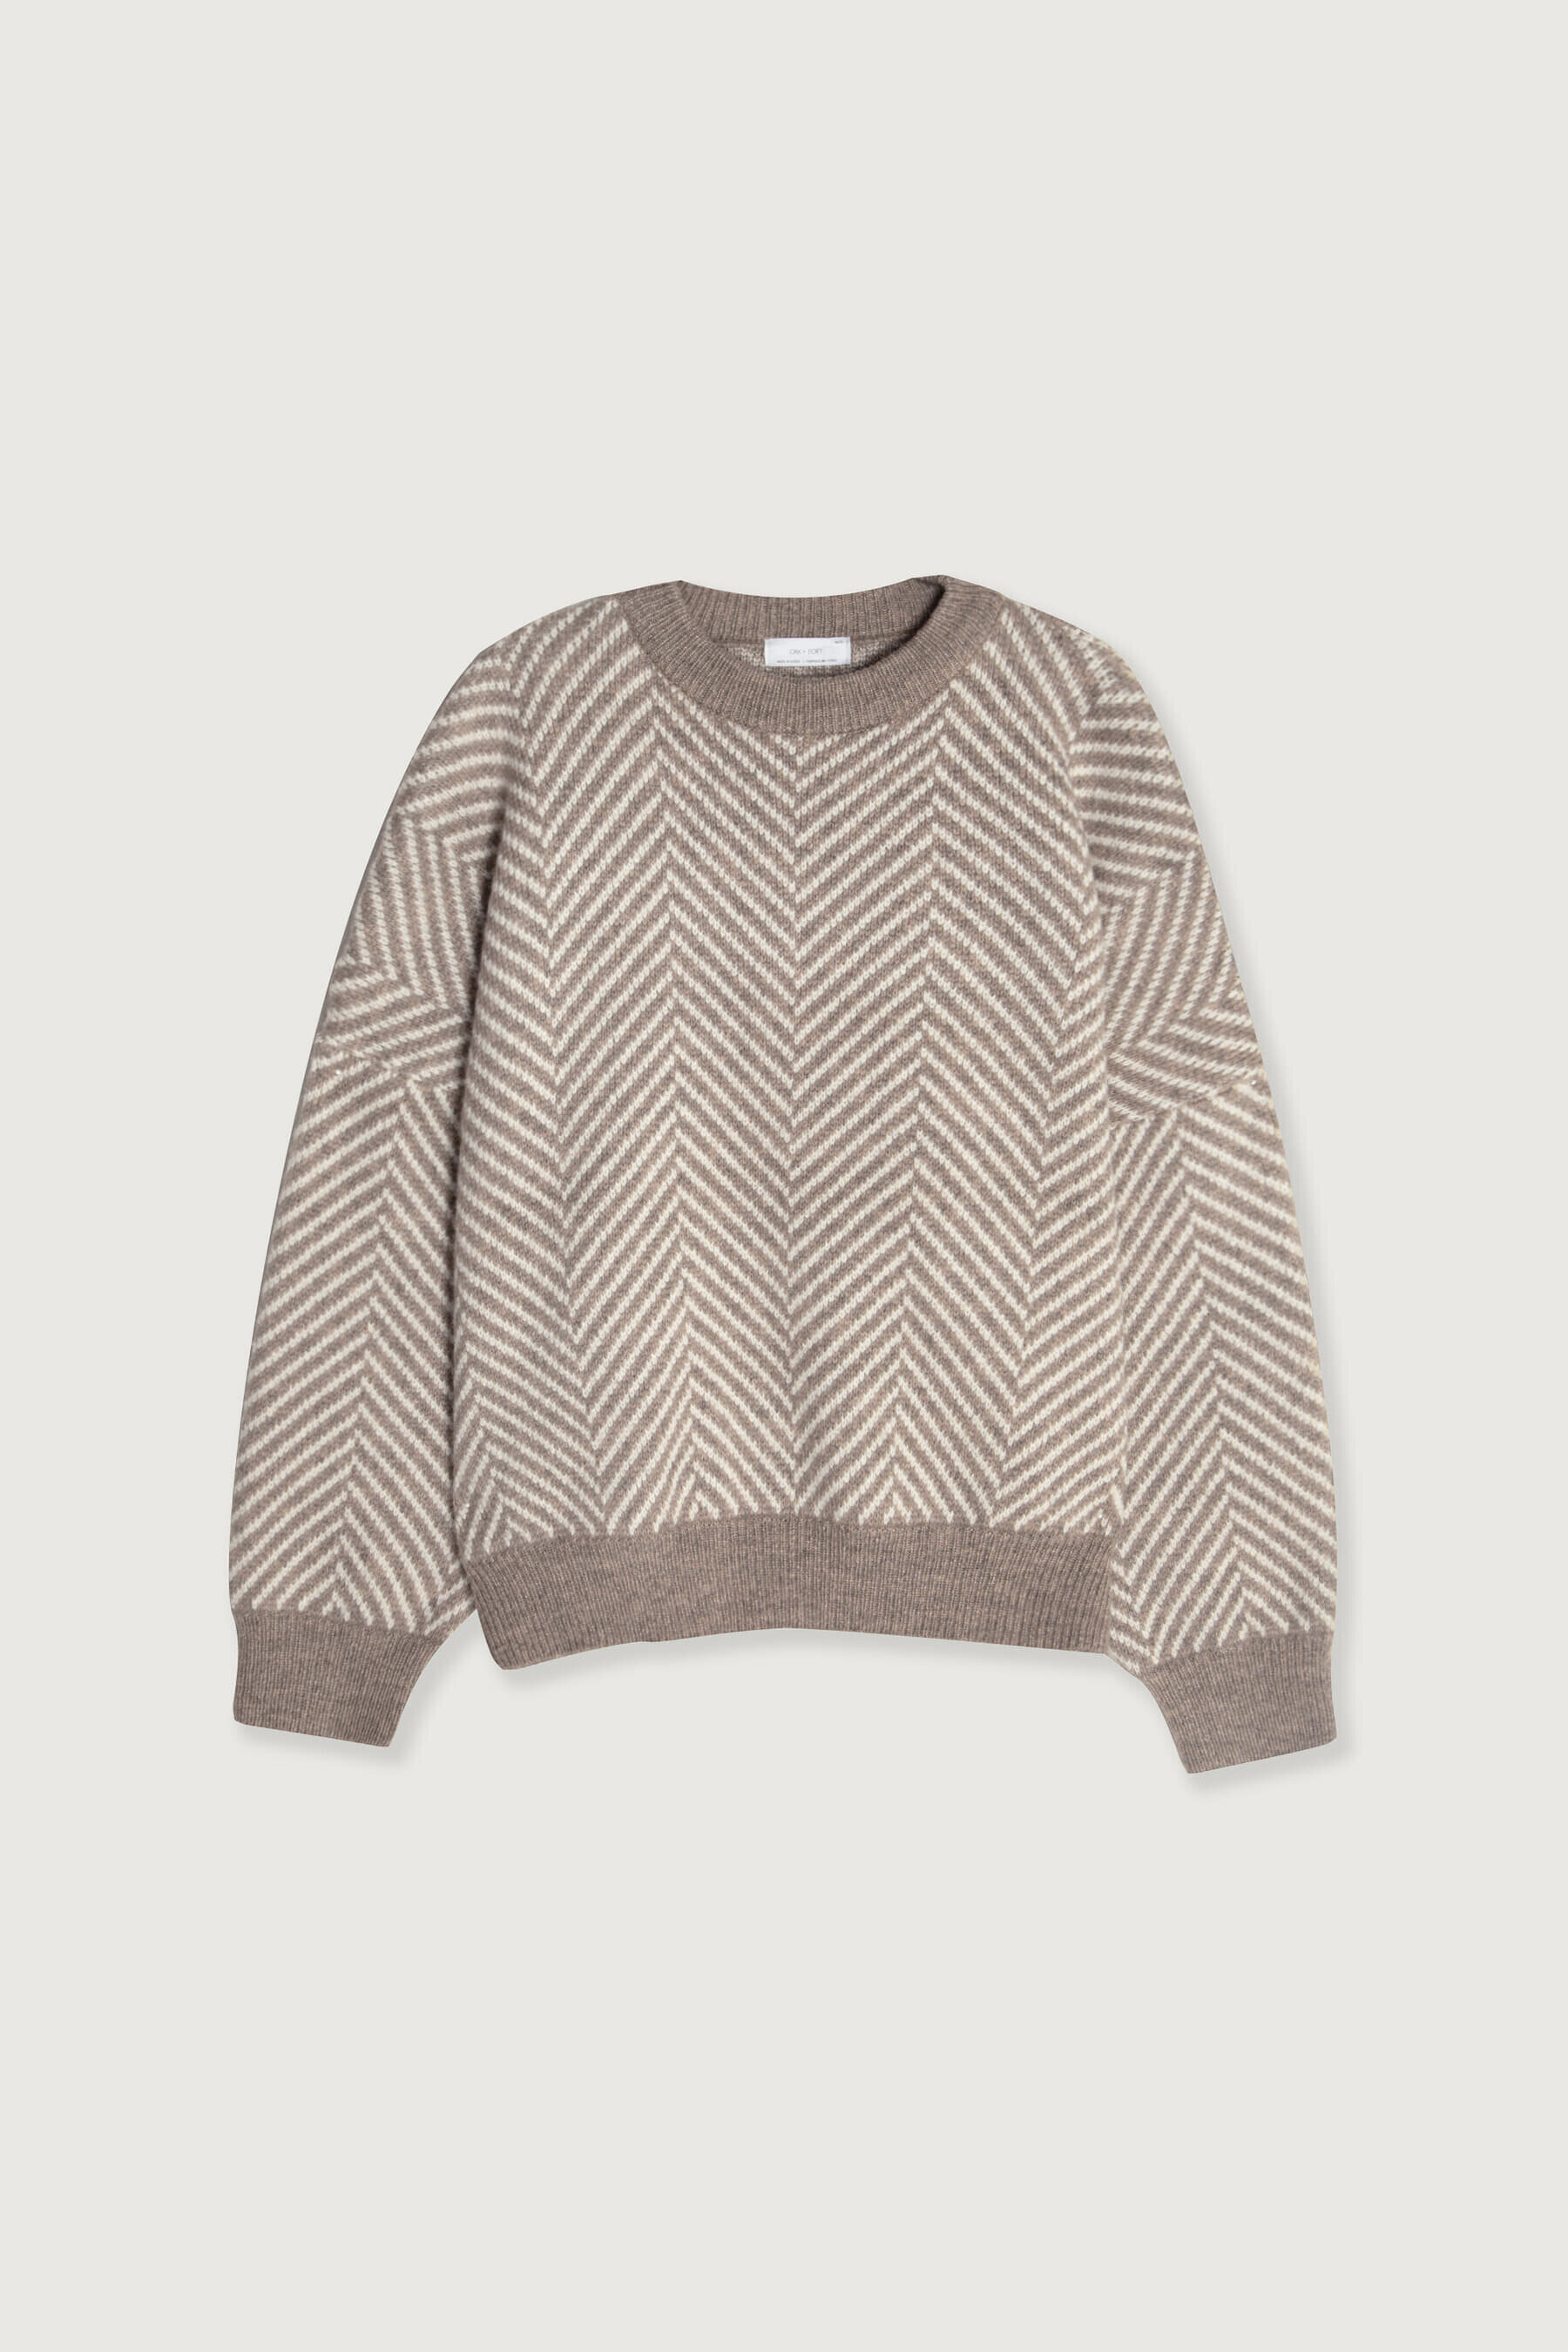 Sweater-7196_Brown-6.jpg